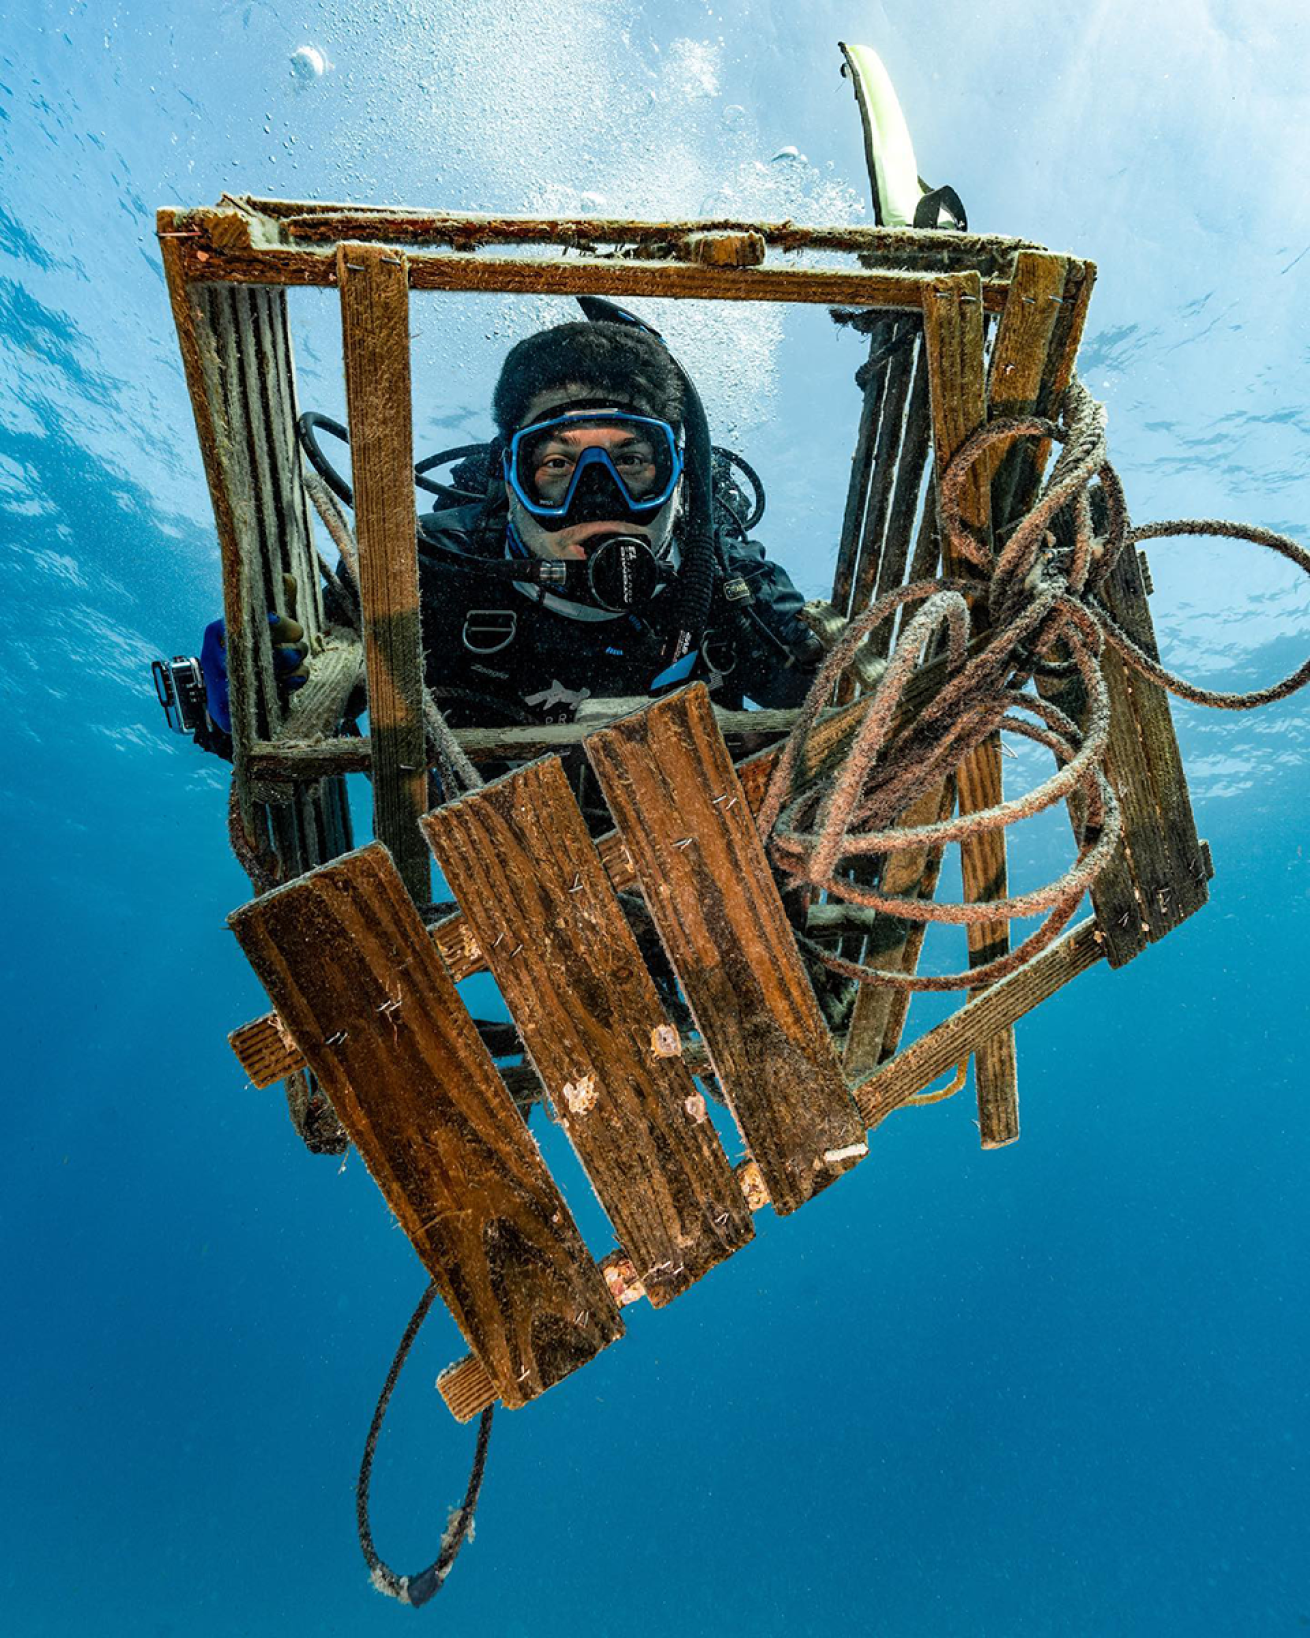 Diver cleans up debris in ocean.